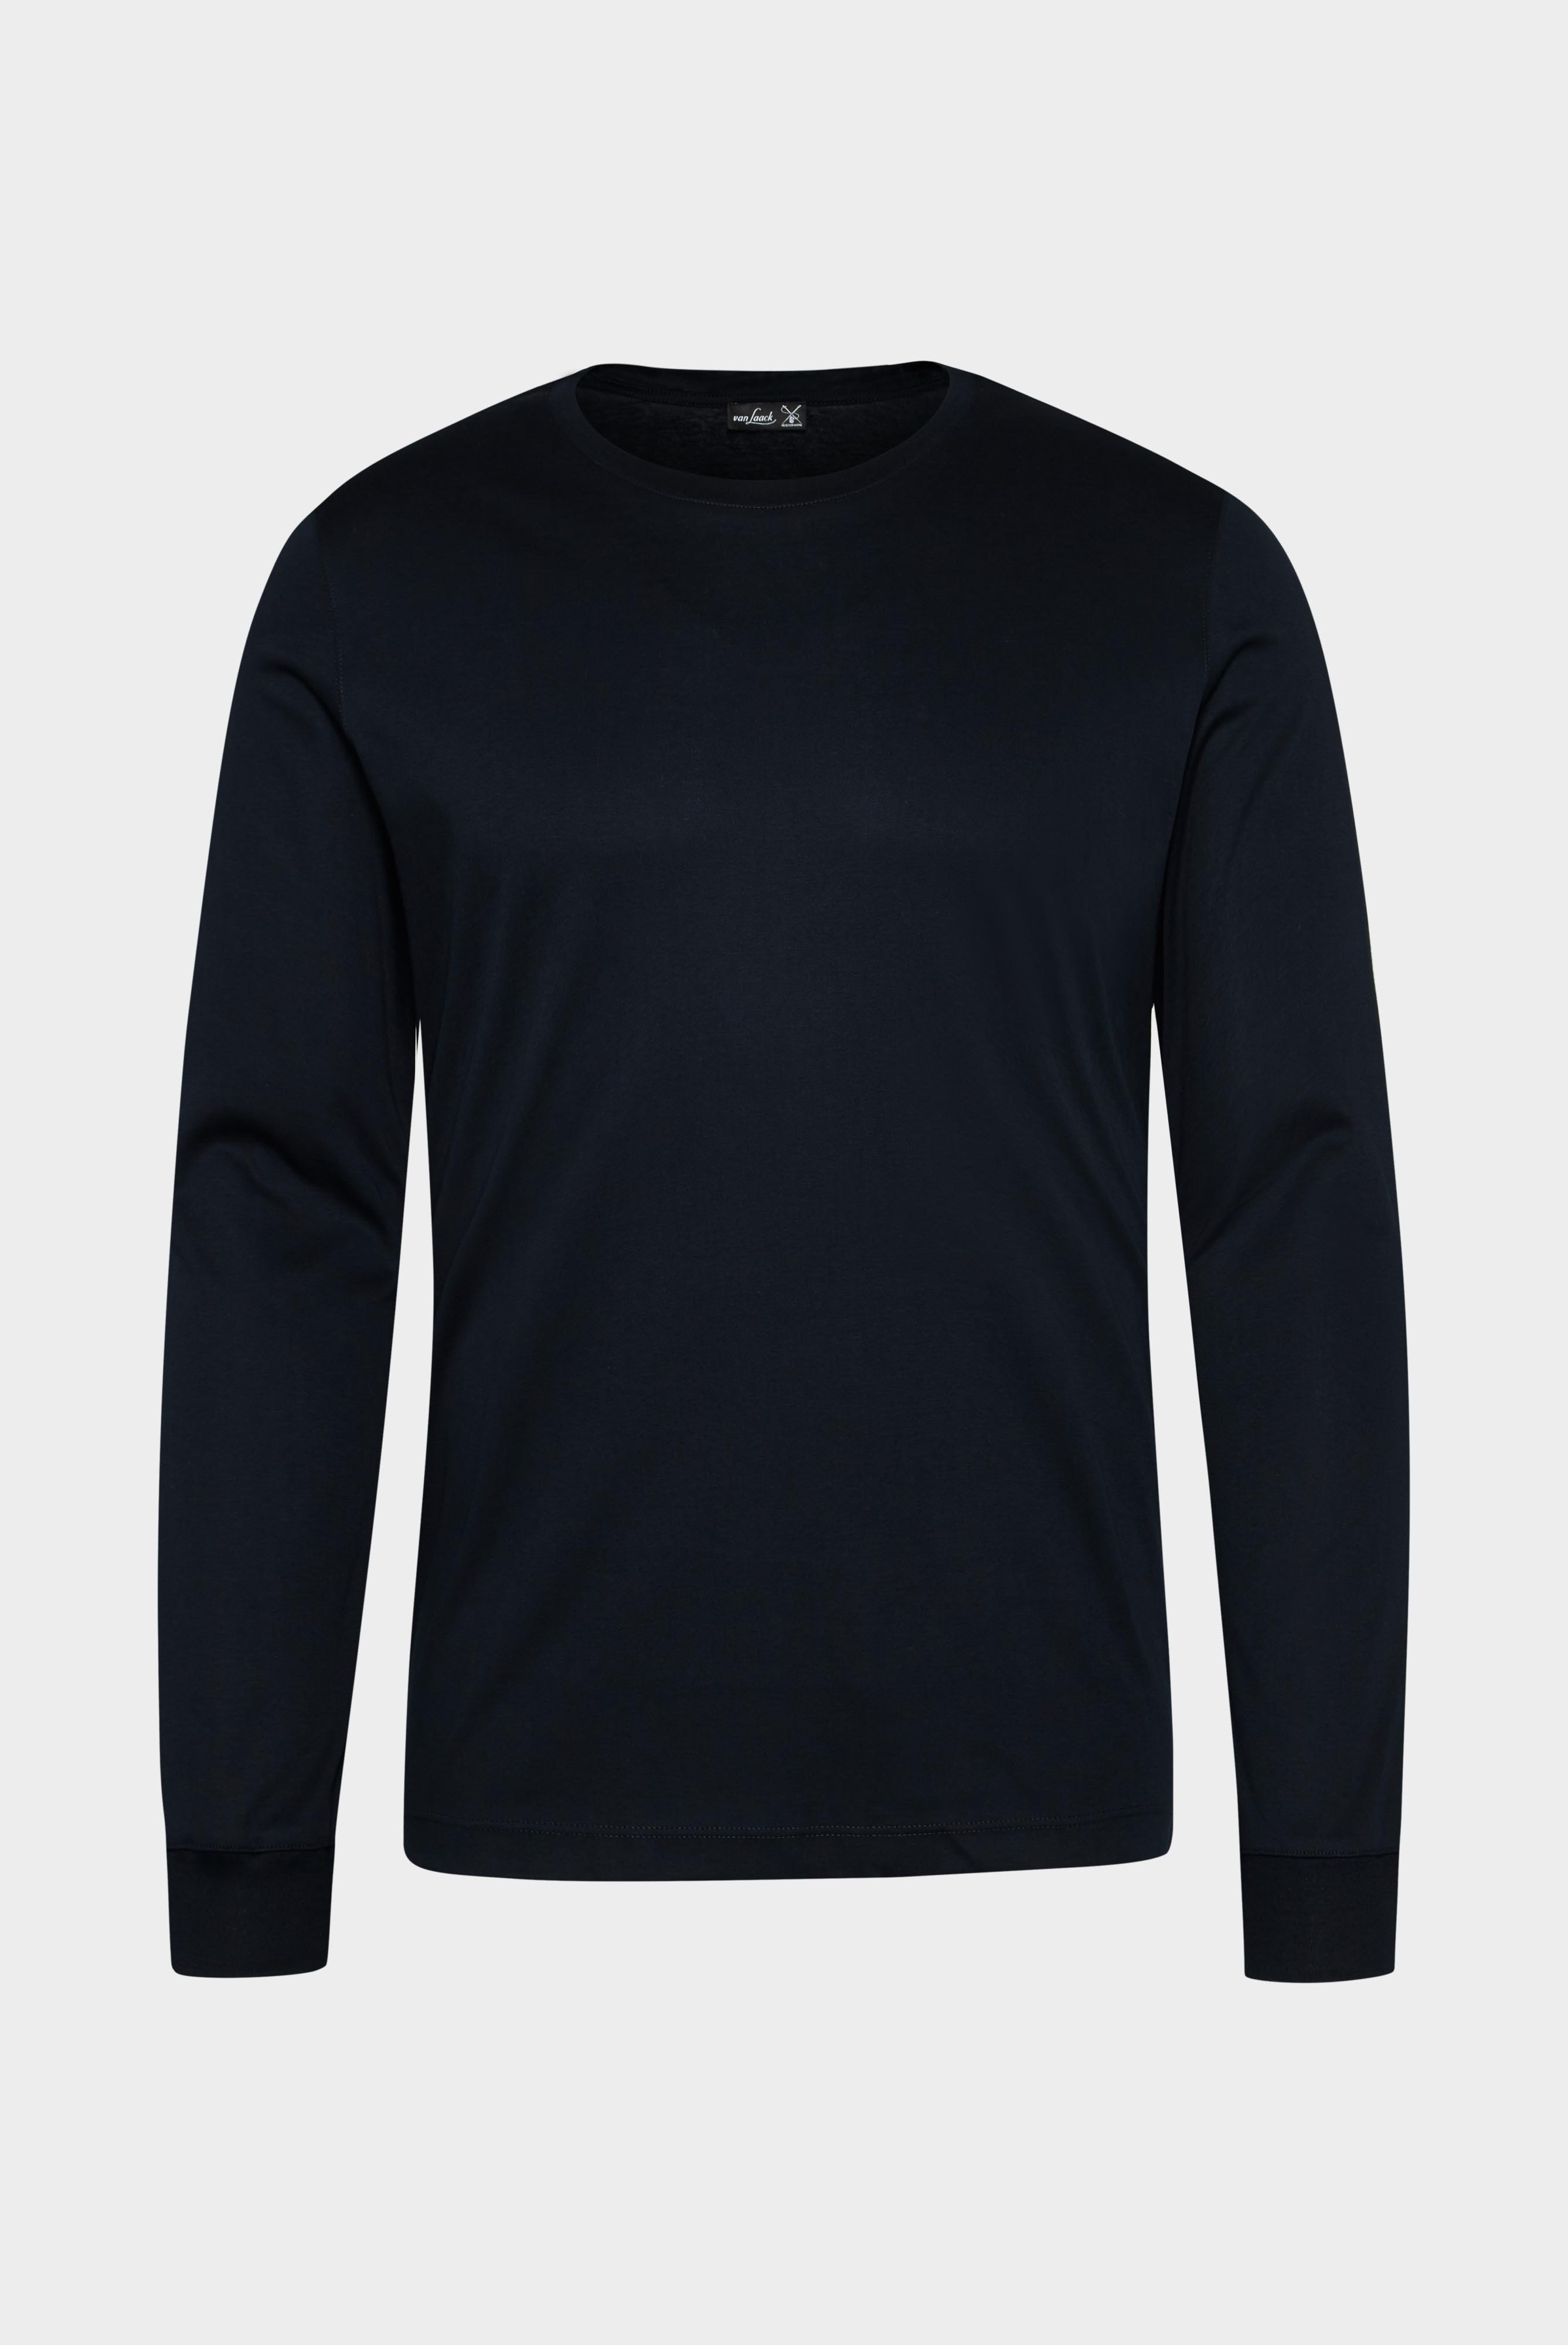 T-Shirts+Langarm Jersey T-Shirt mit Rundhals Slim Fit+20.1718.UX.180031.790.S